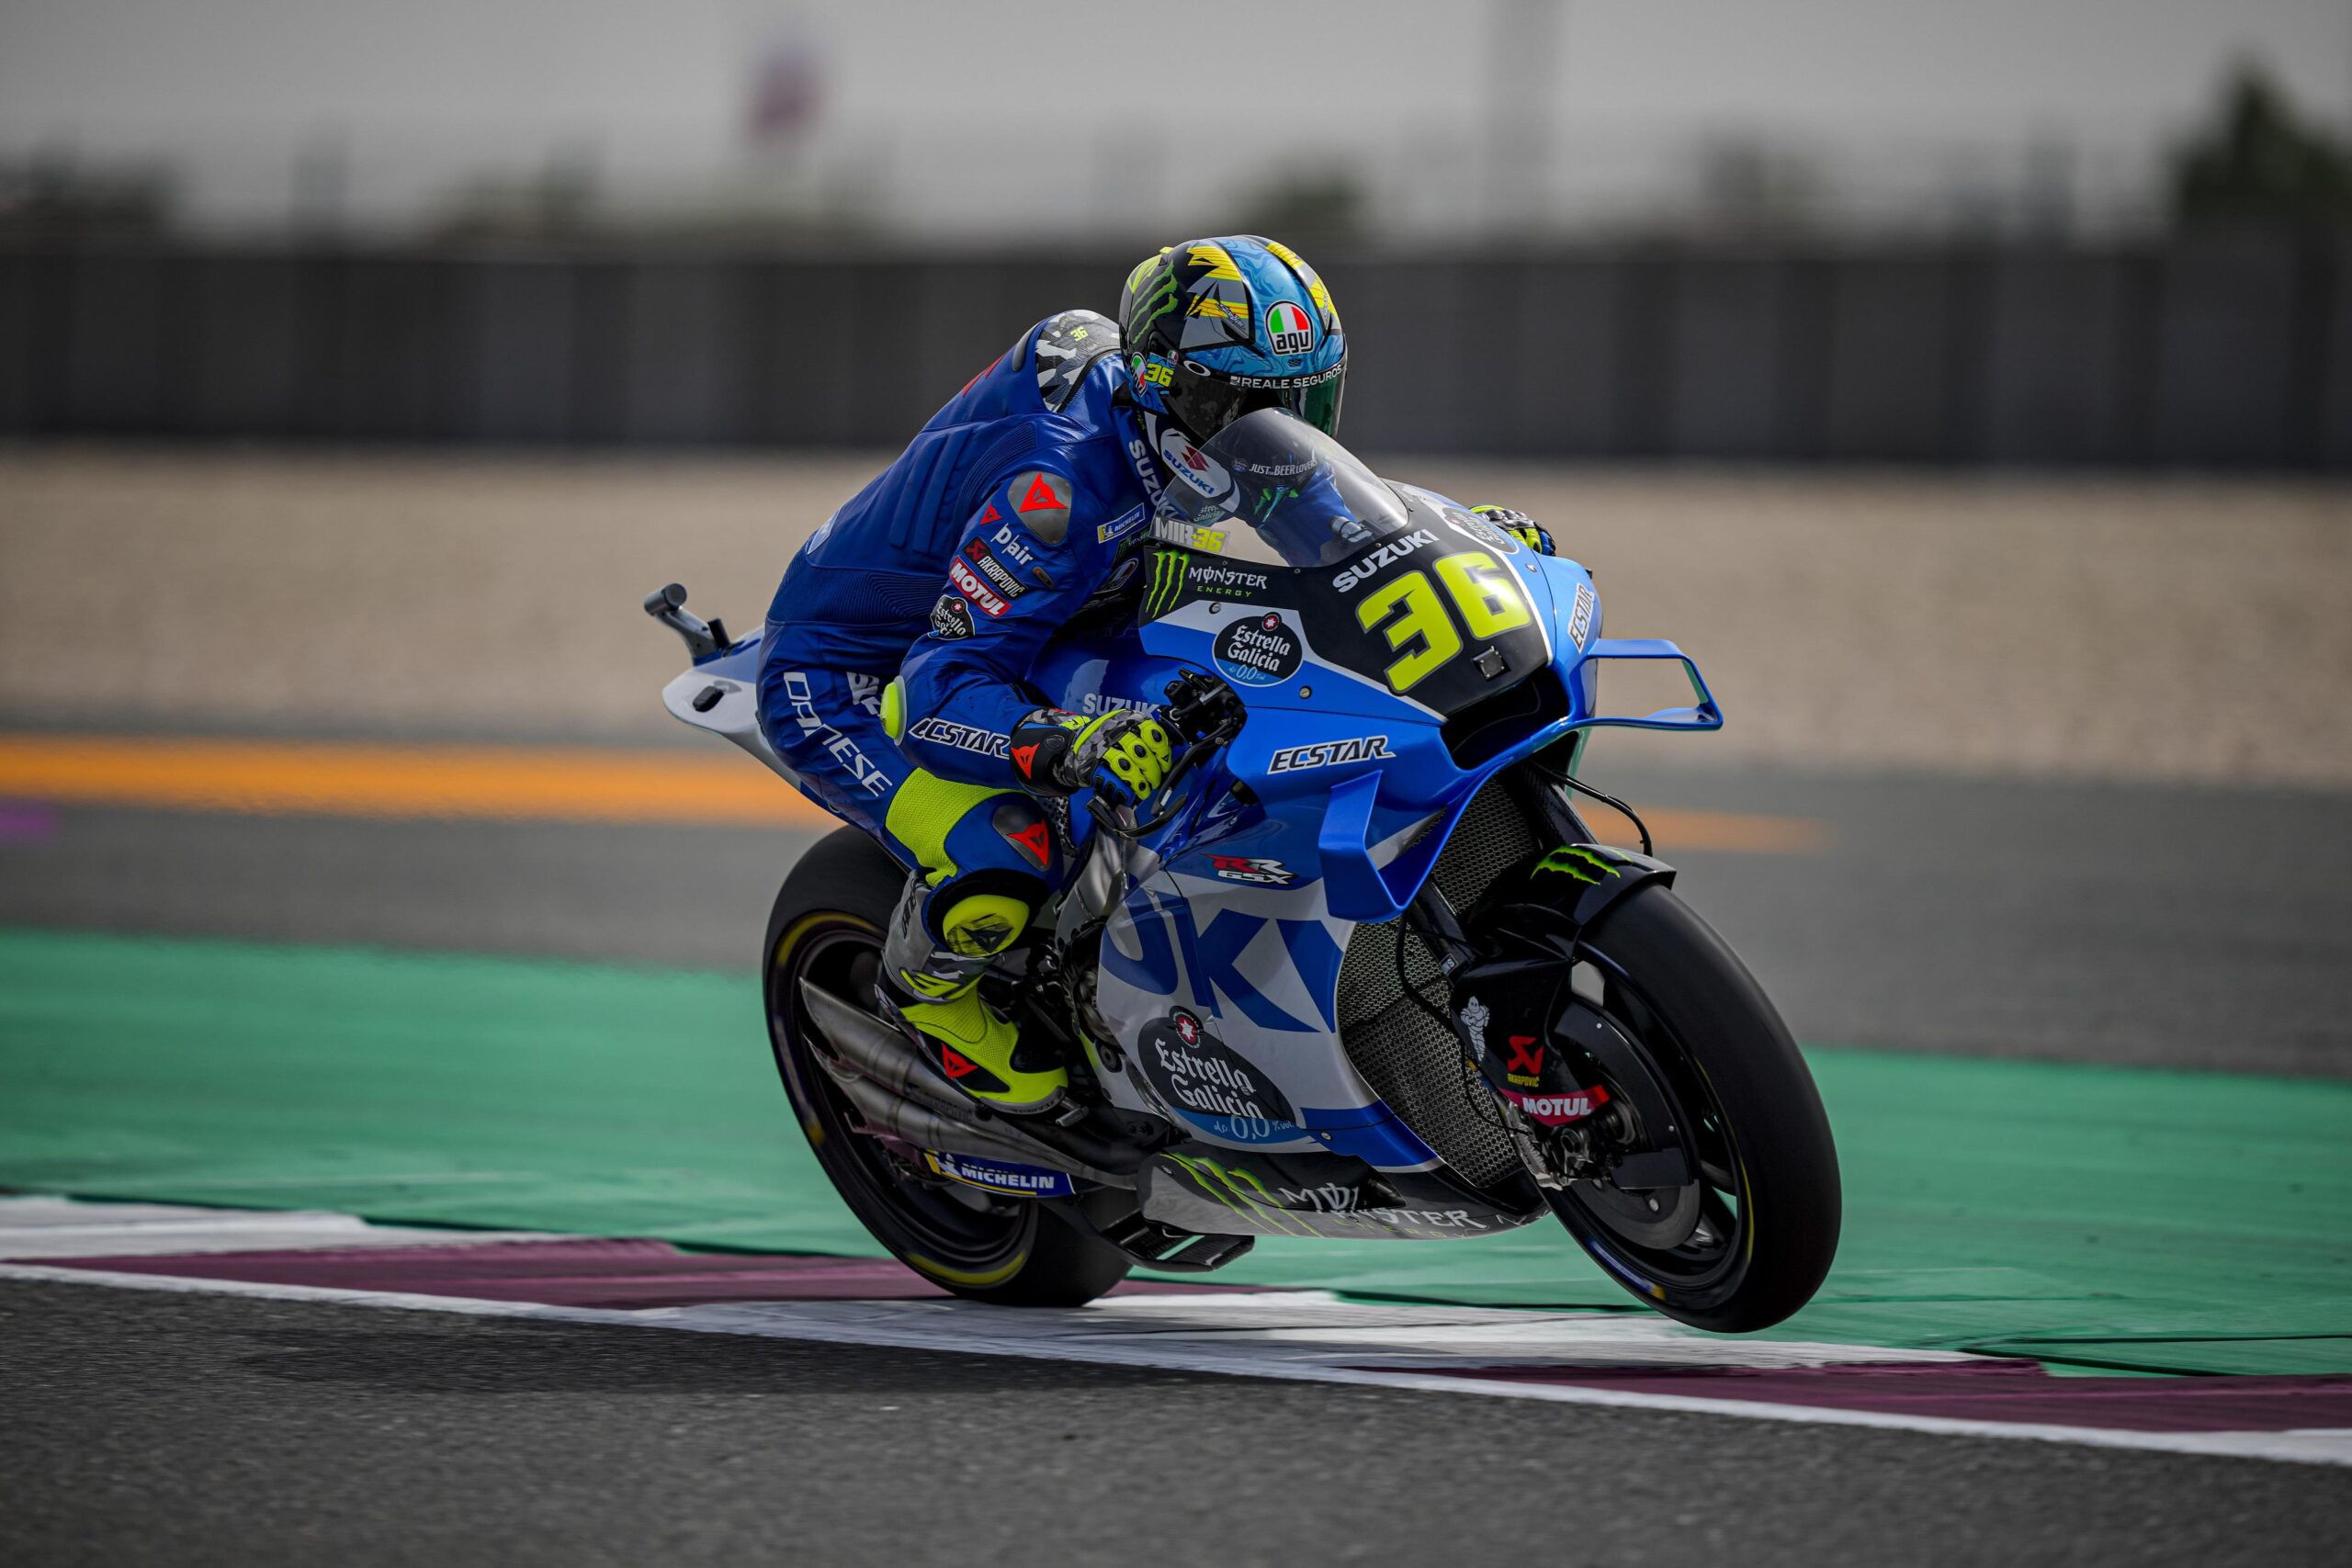 MotoGP, Qatar, 2022, Joan Mir (6.º): “Esperava mais desta corrida” -  MotoSport